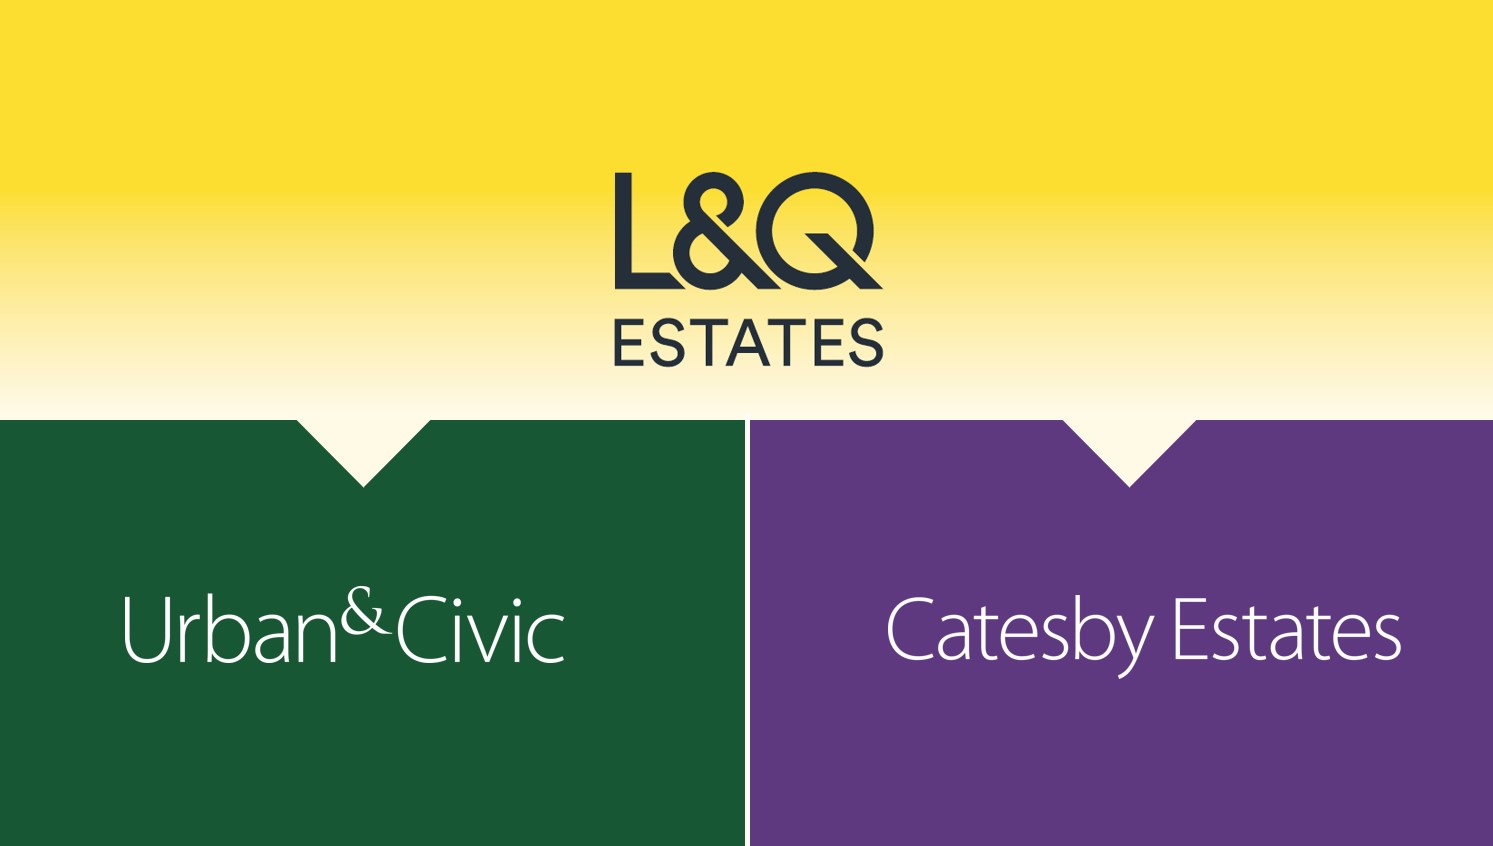 Urban&Civic to acquire L&Q Estates from L&Q group